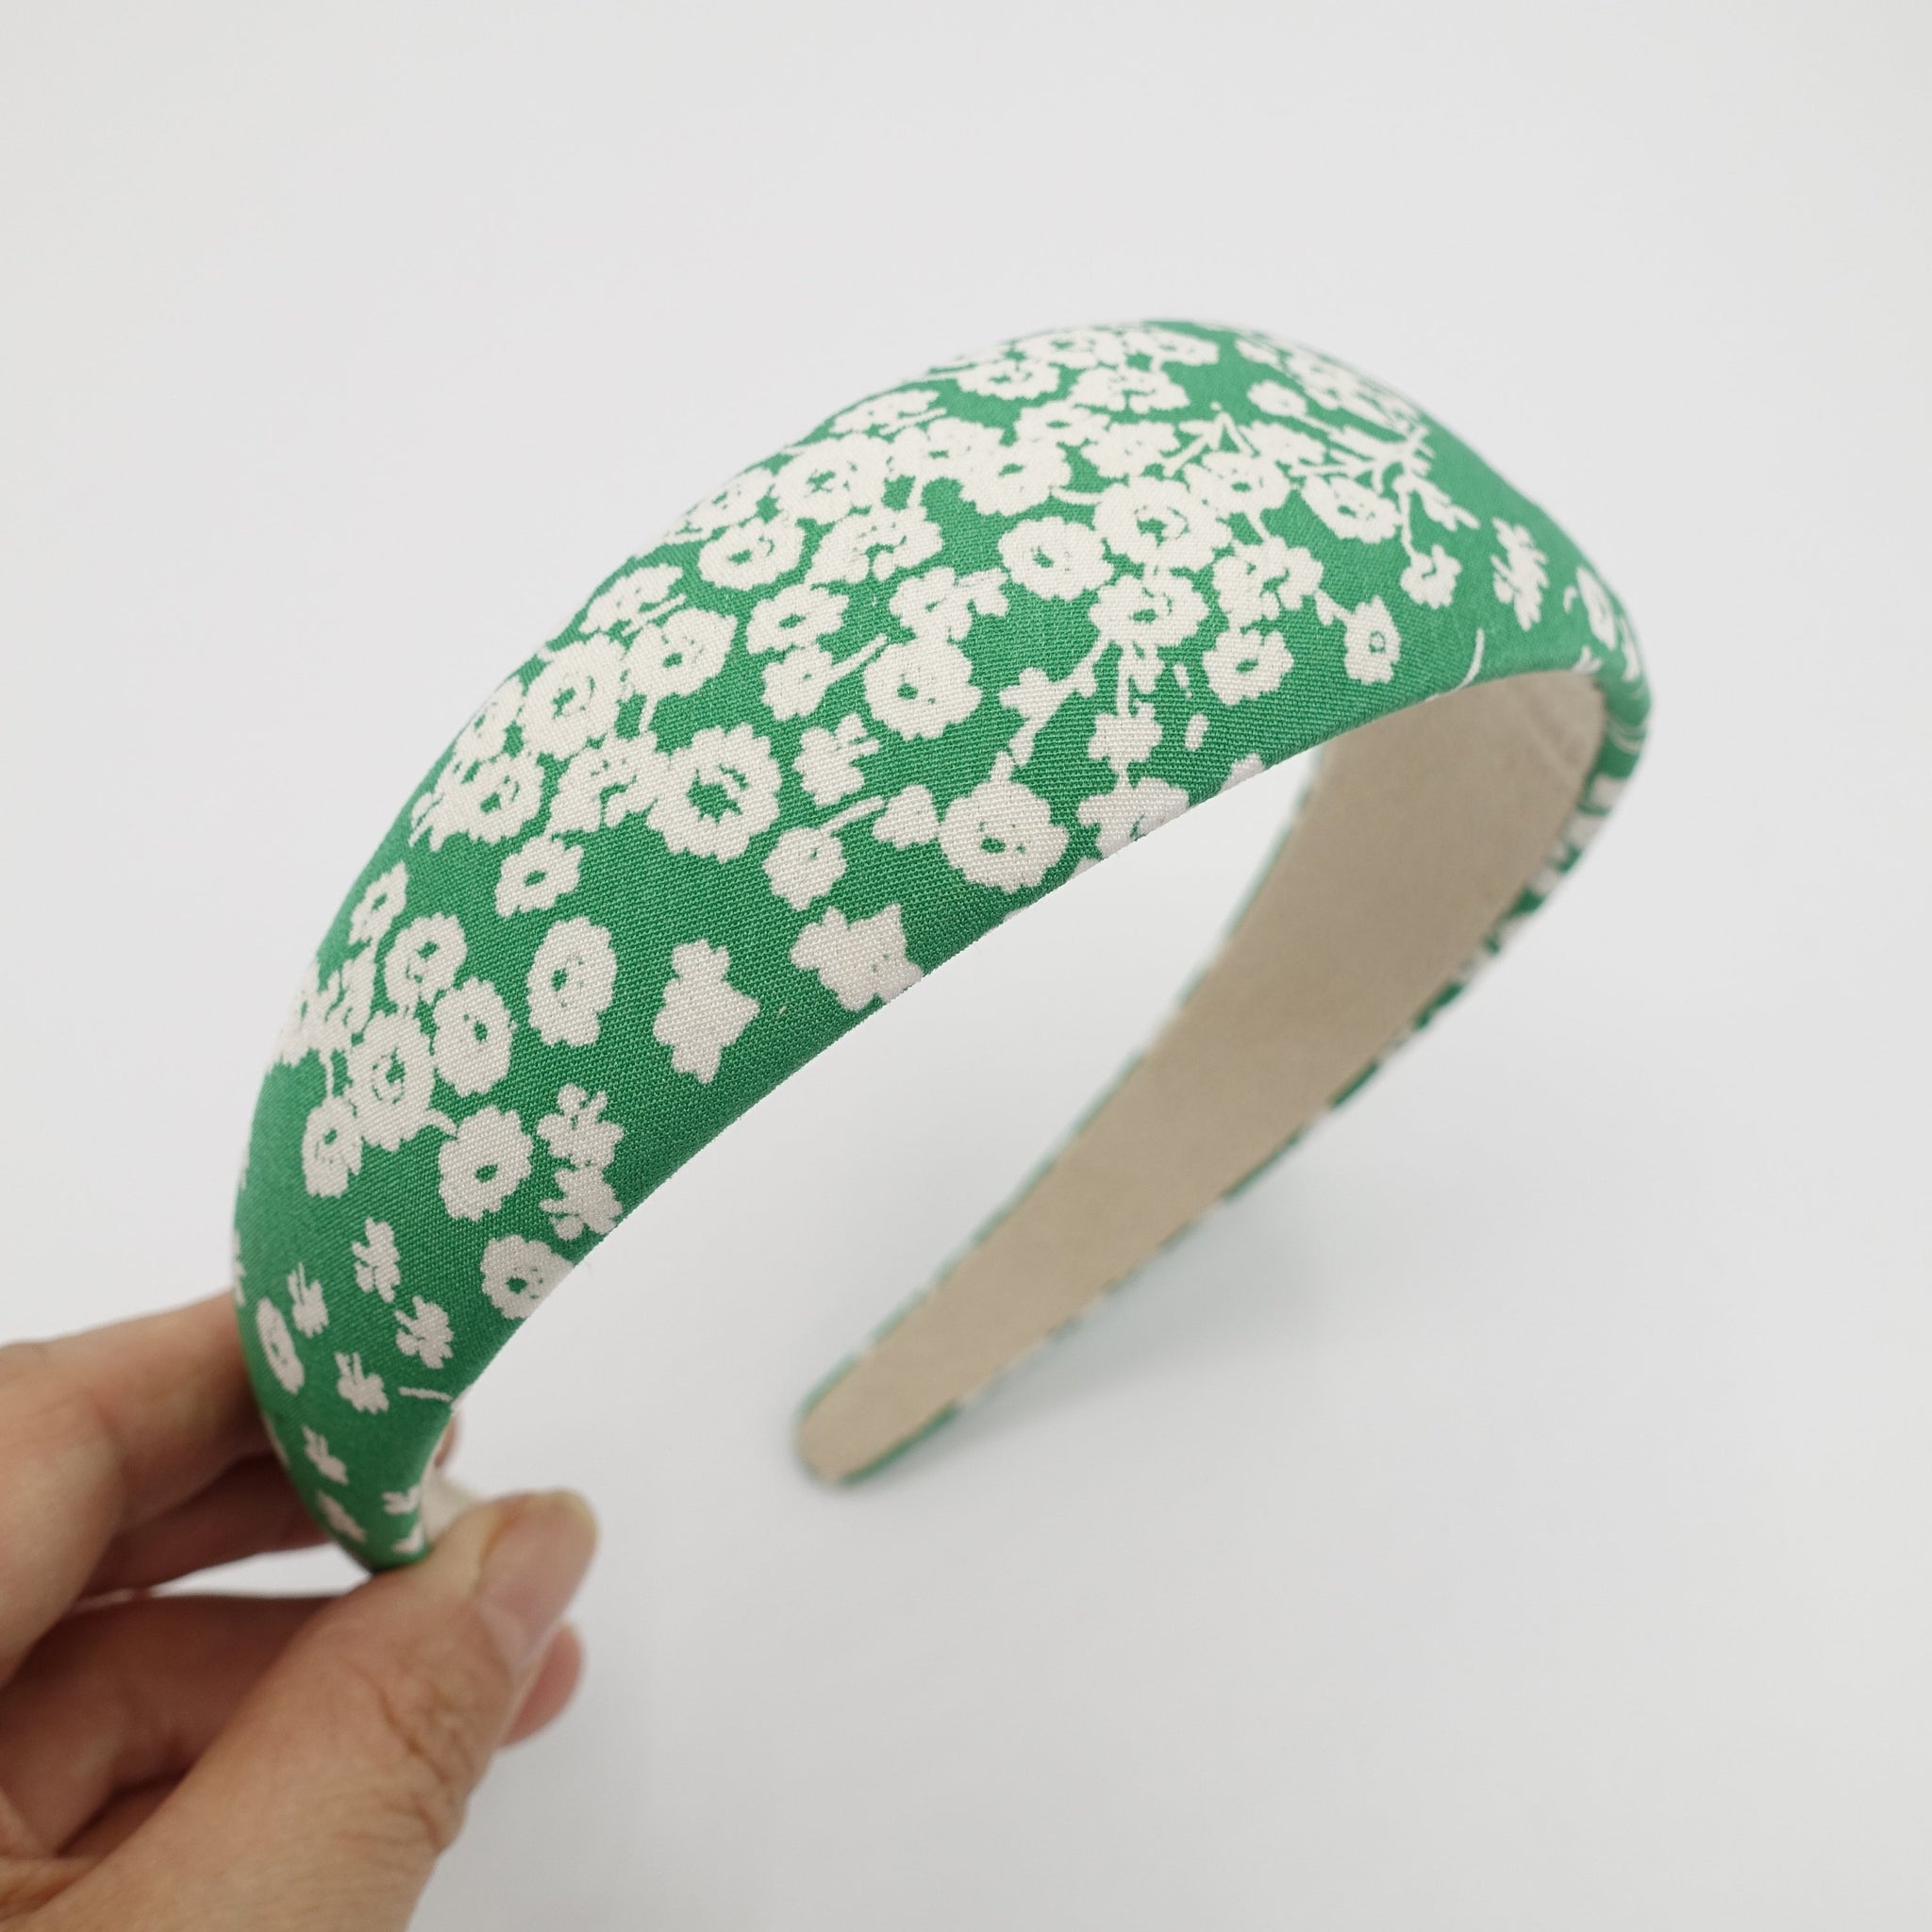 VeryShine hairband/headband simplified floral headband padded casual hairband for women